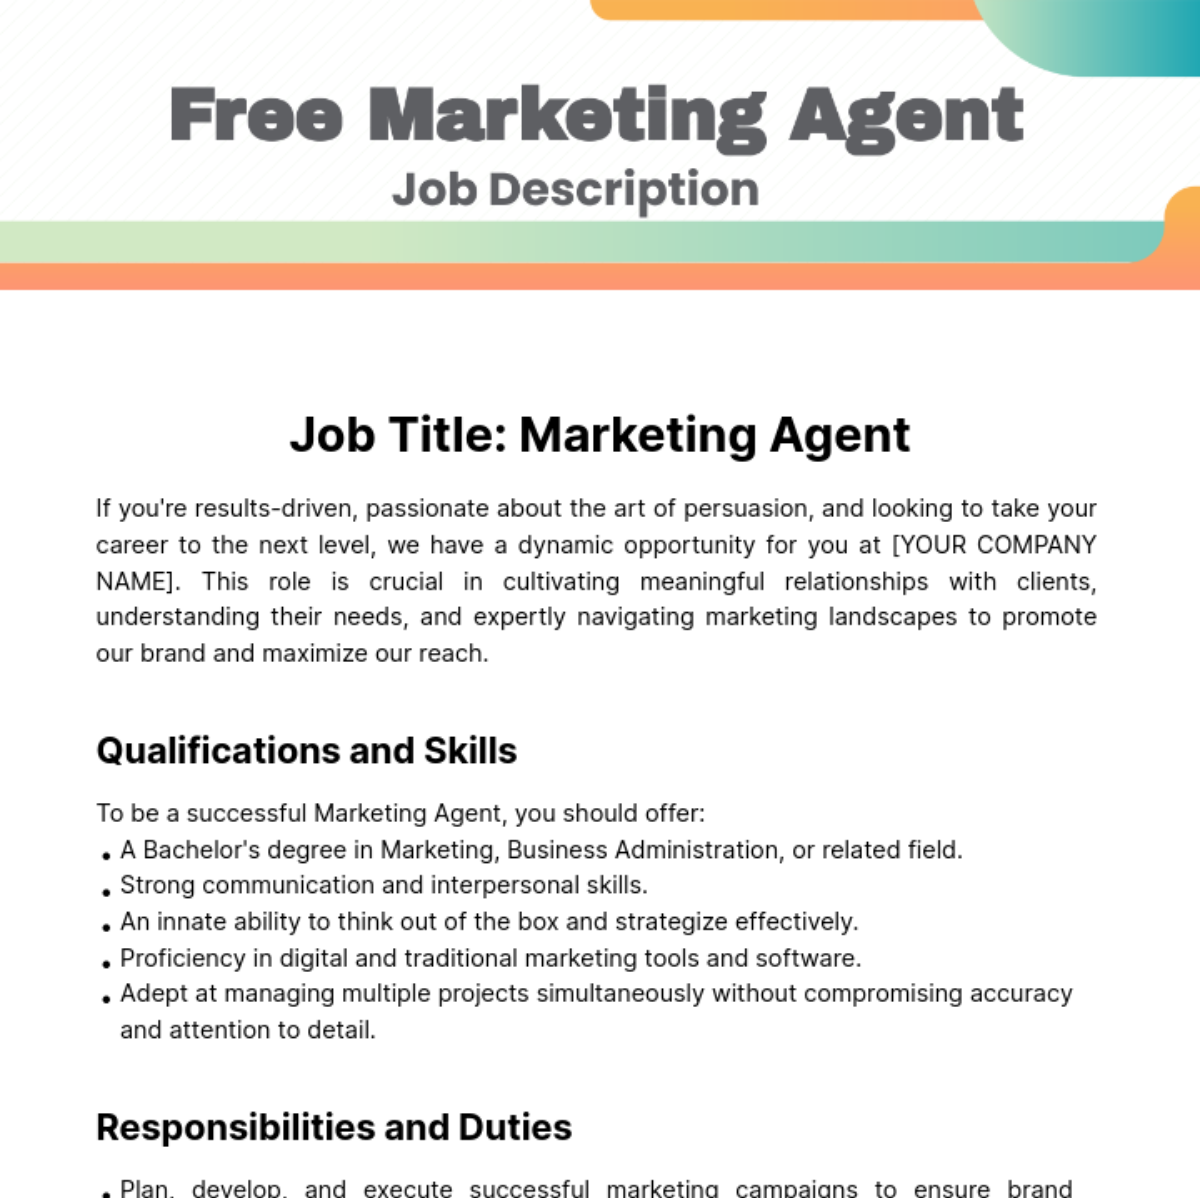 Free Marketing Agent Job Description Template